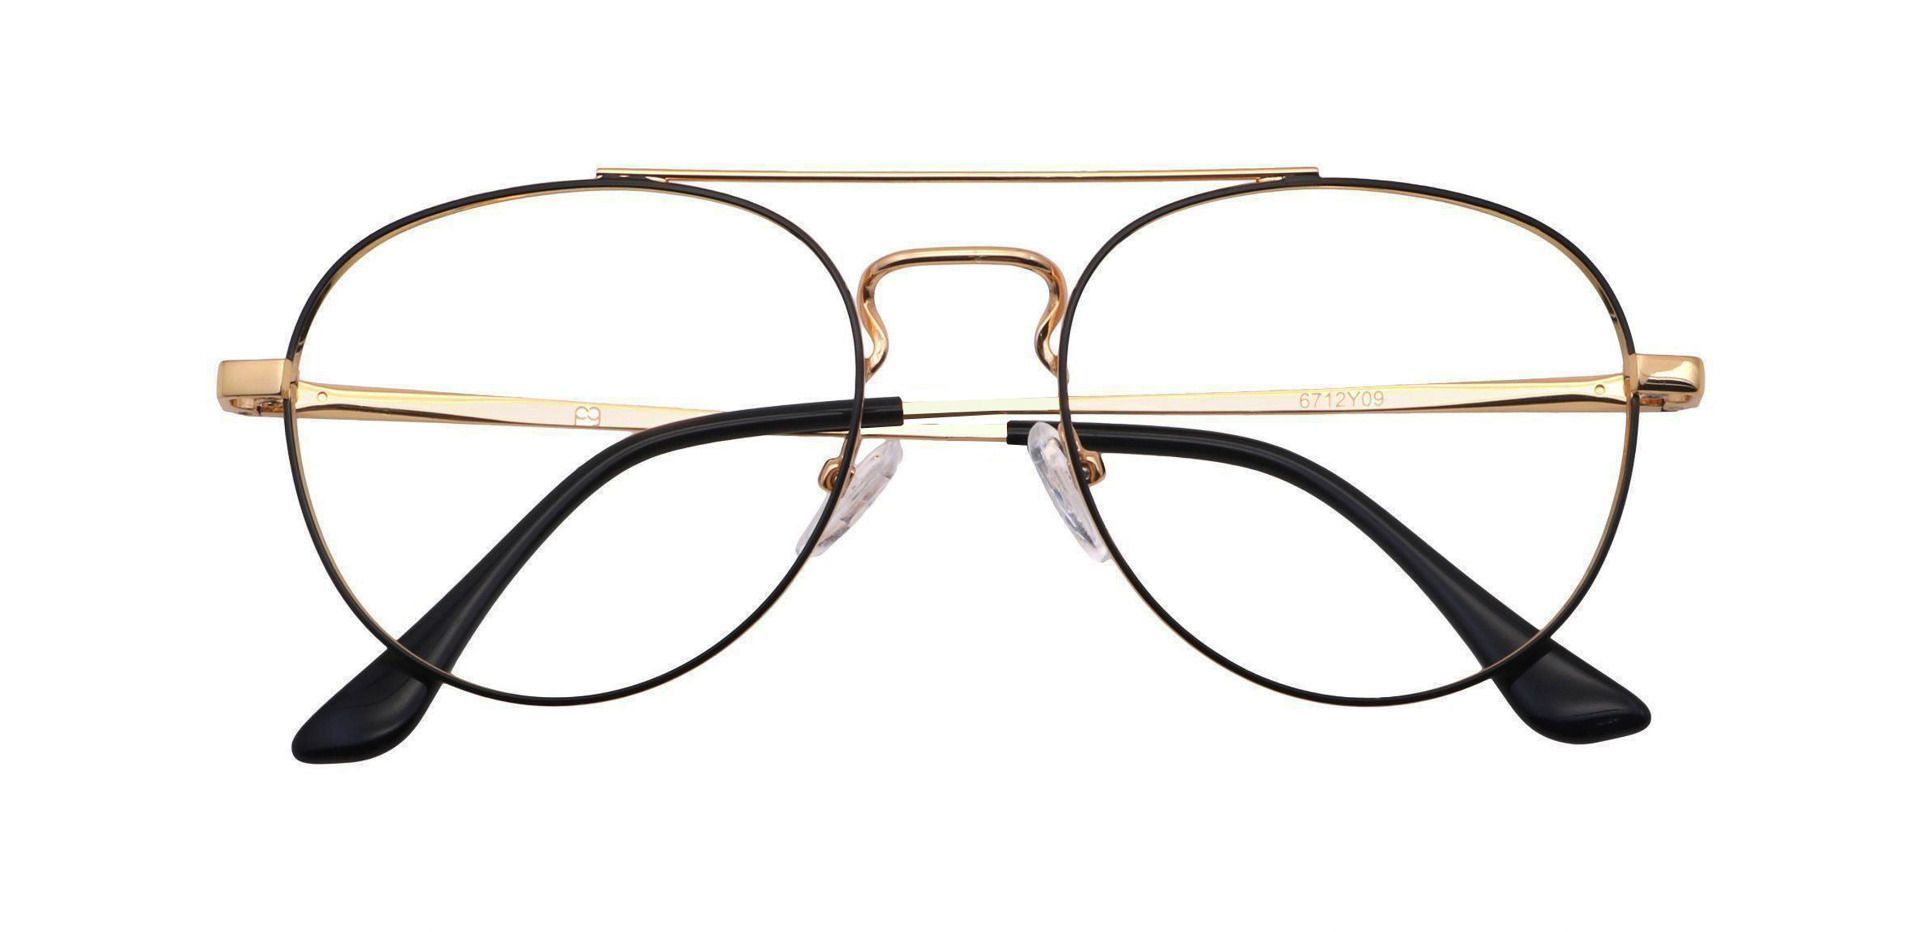 Trapp Aviator Eyeglasses Frame - Gold